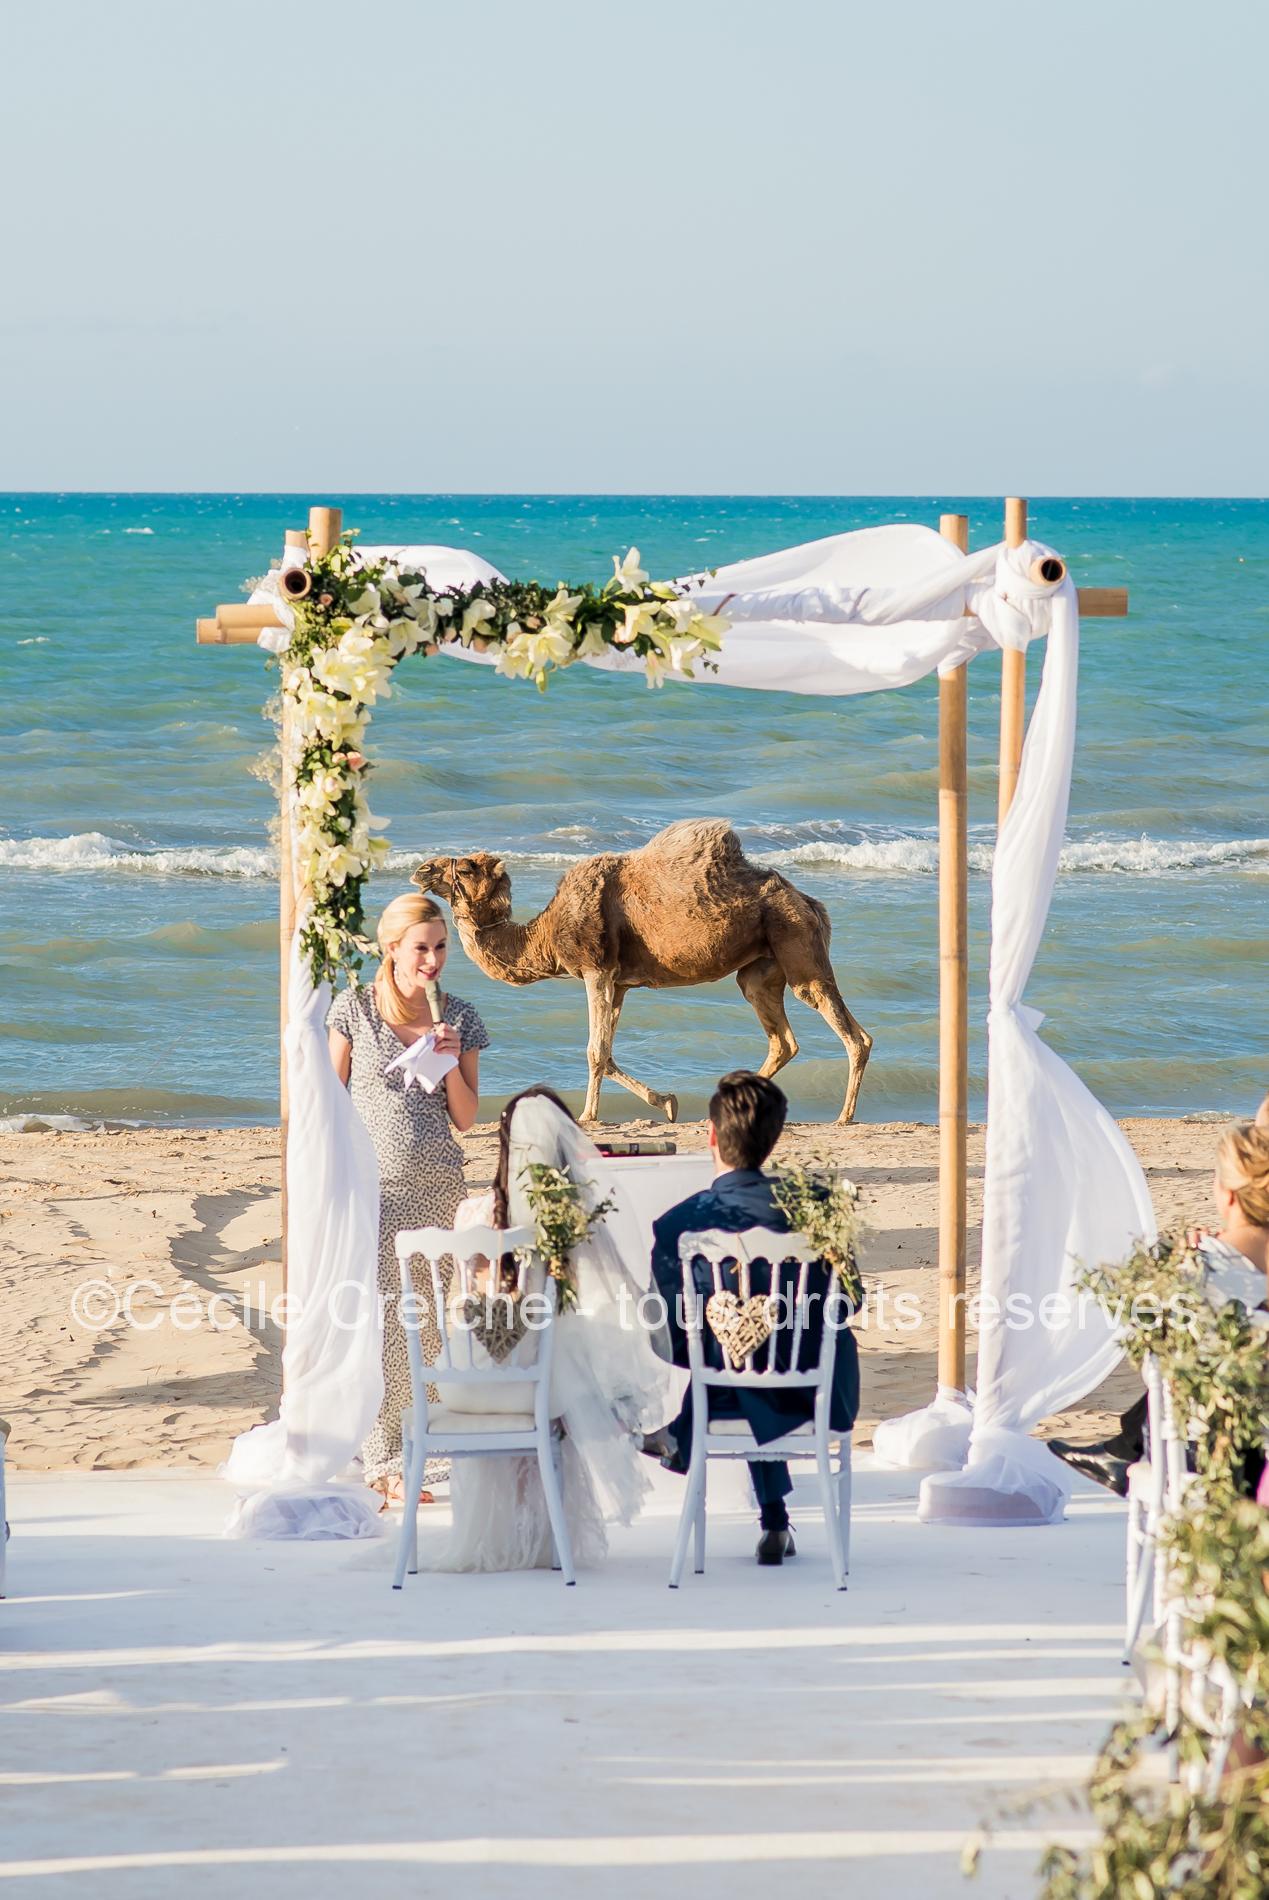 Photographe mariage maroc-7